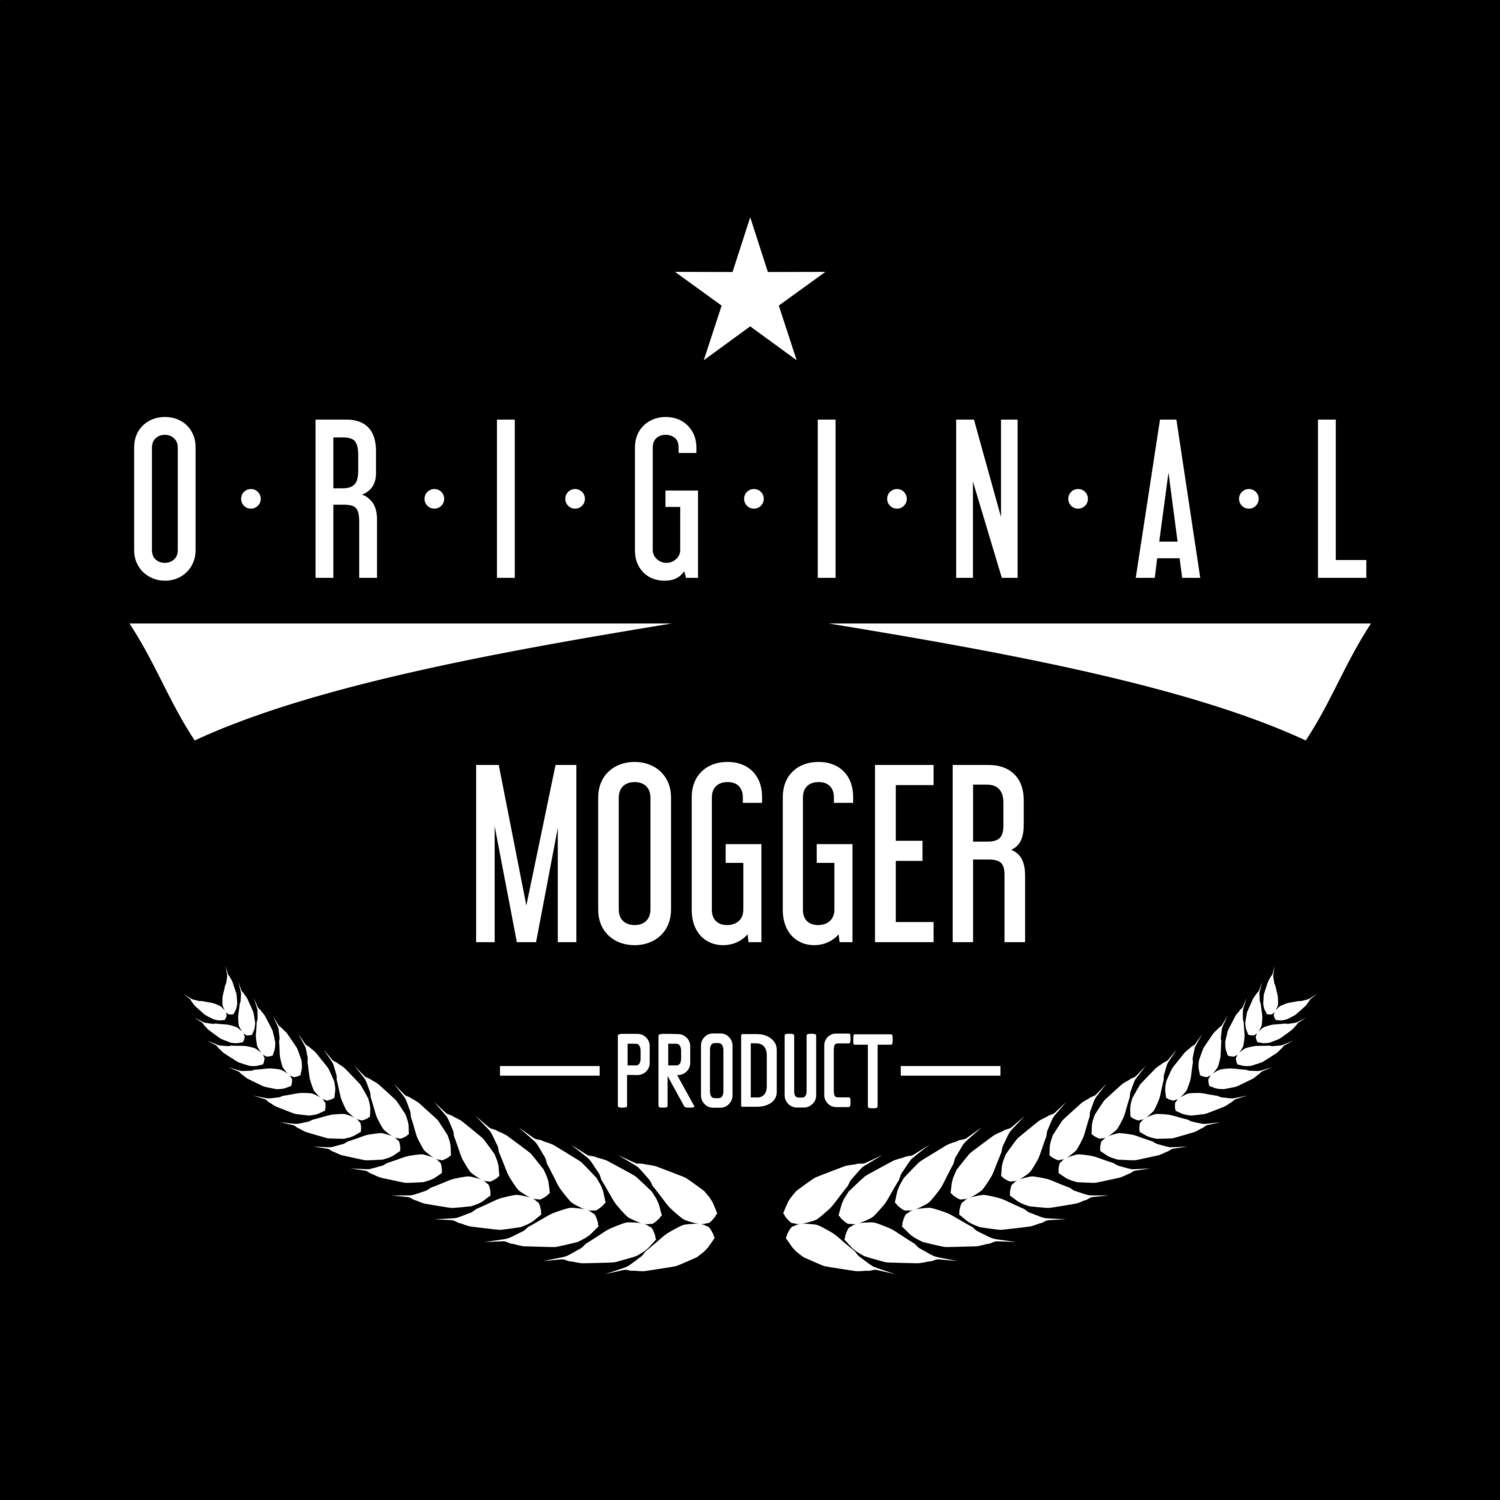 Mogger T-Shirt »Original Product«